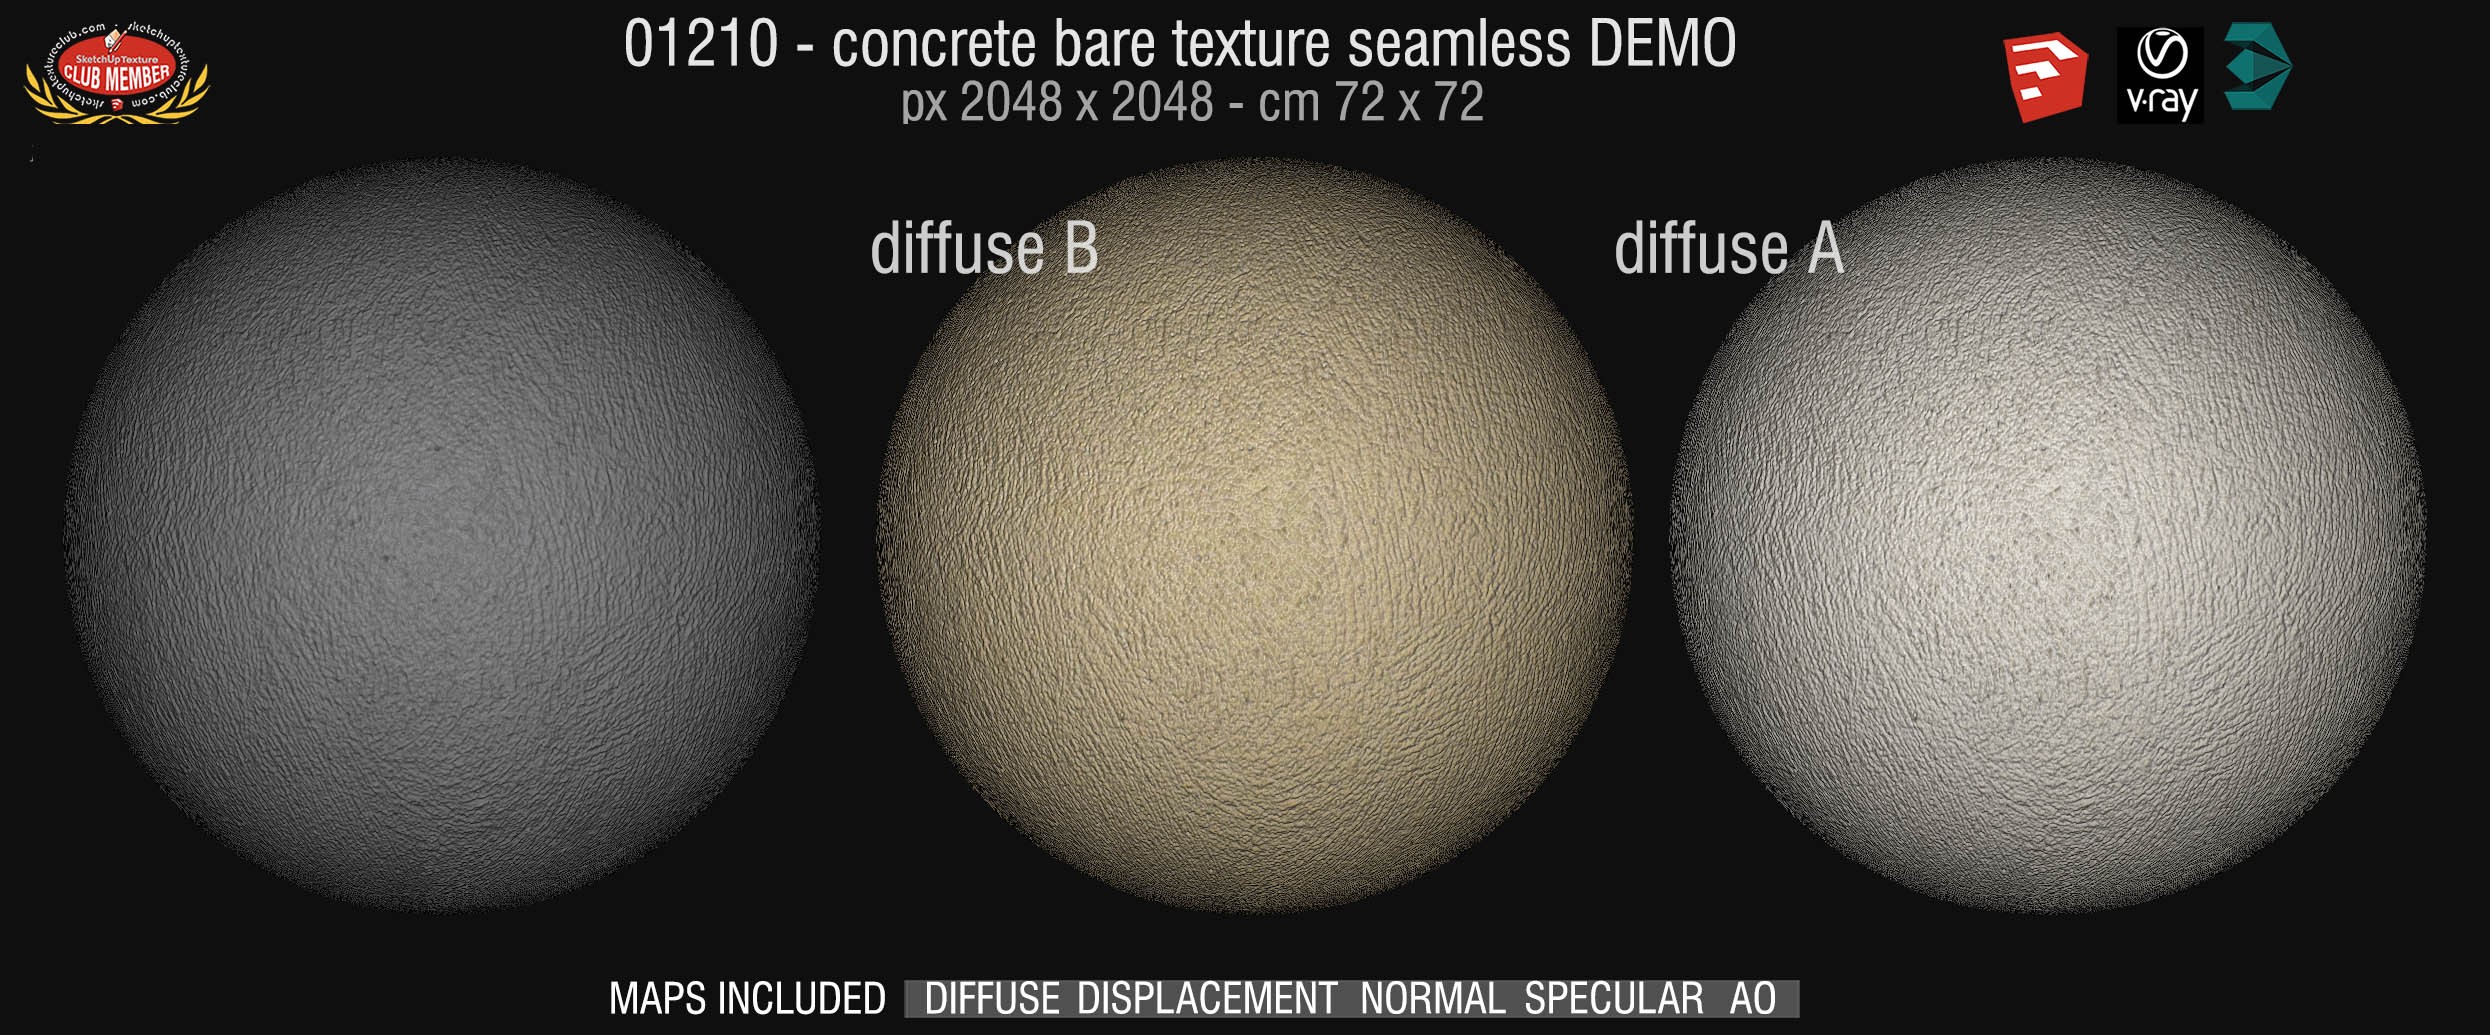 01210 HR Concrete bare clean texture + maps DEMO